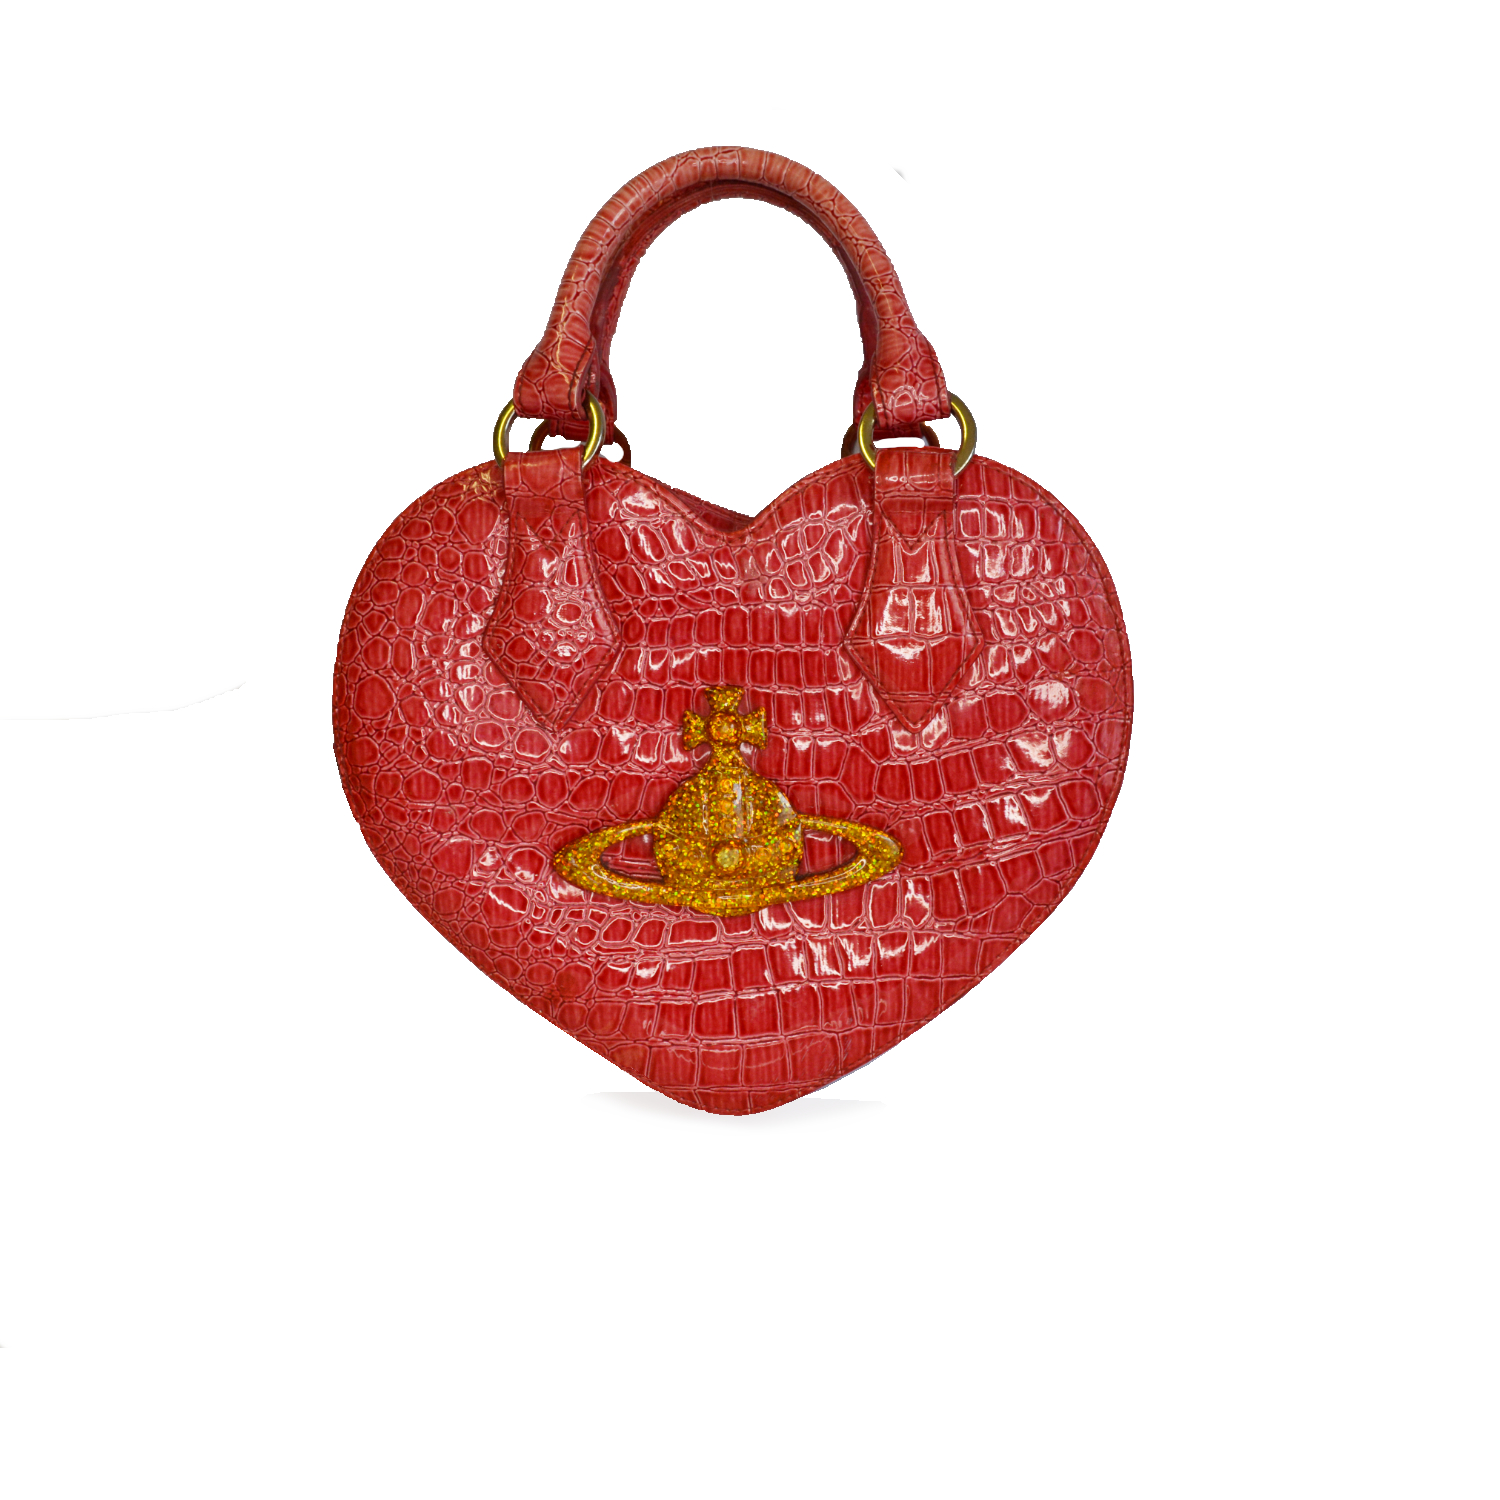 Vivienne Westwood Dorset Heart Bag, Bragmybag